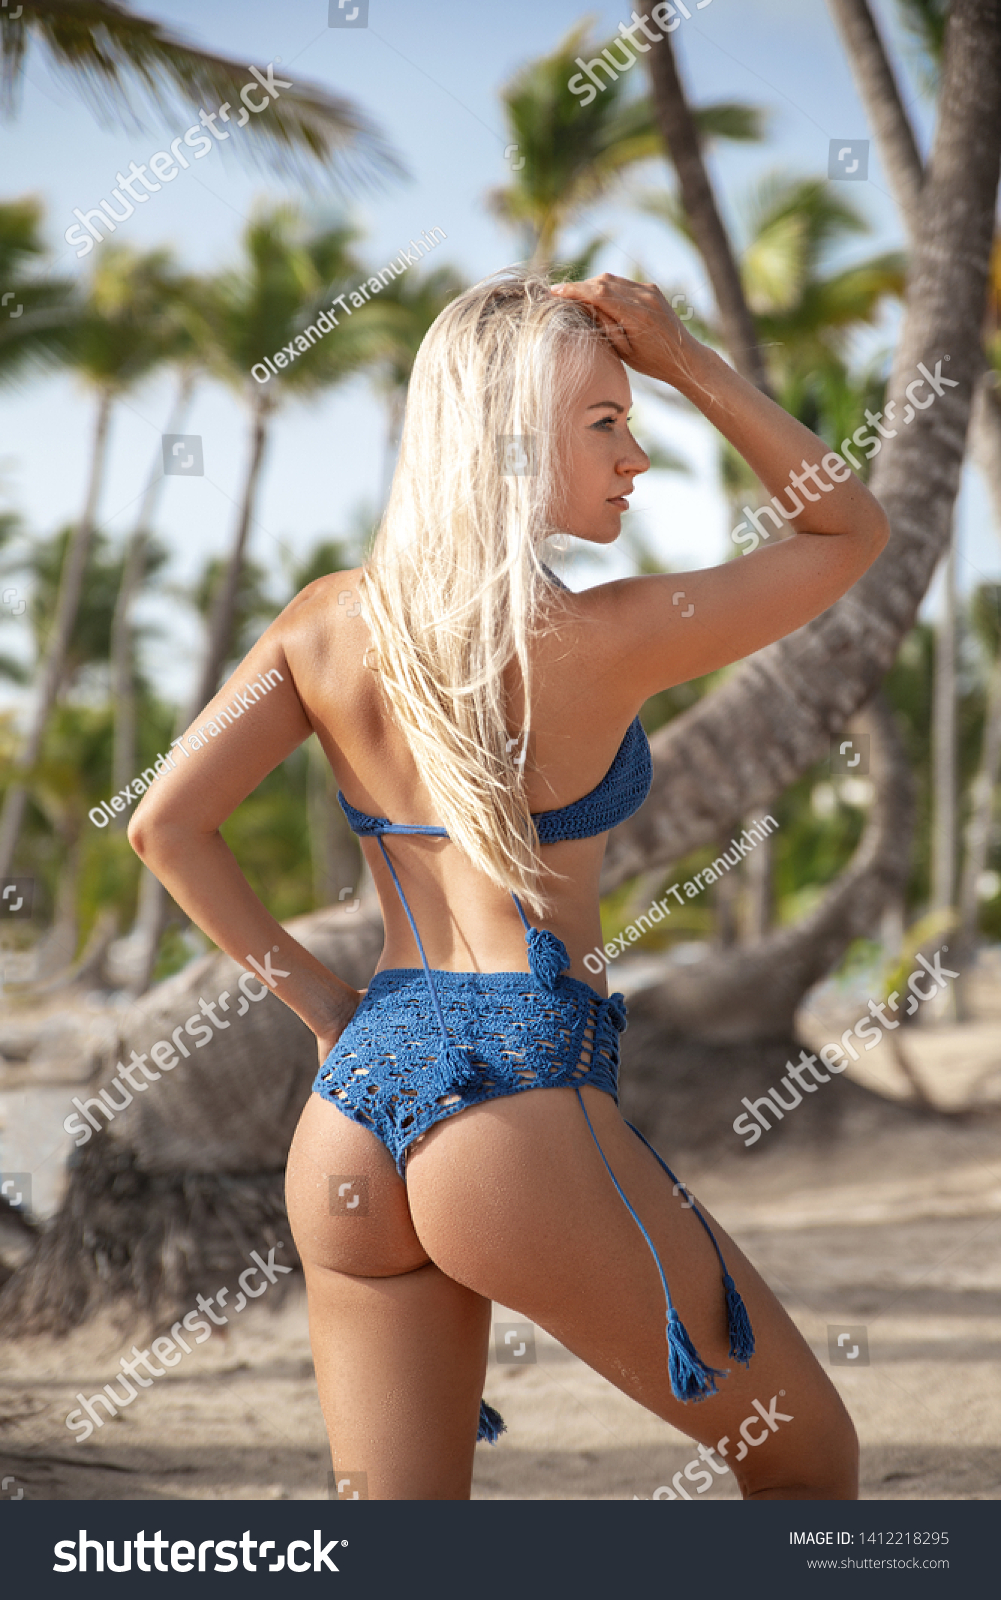 nice ass sexy blonde girl